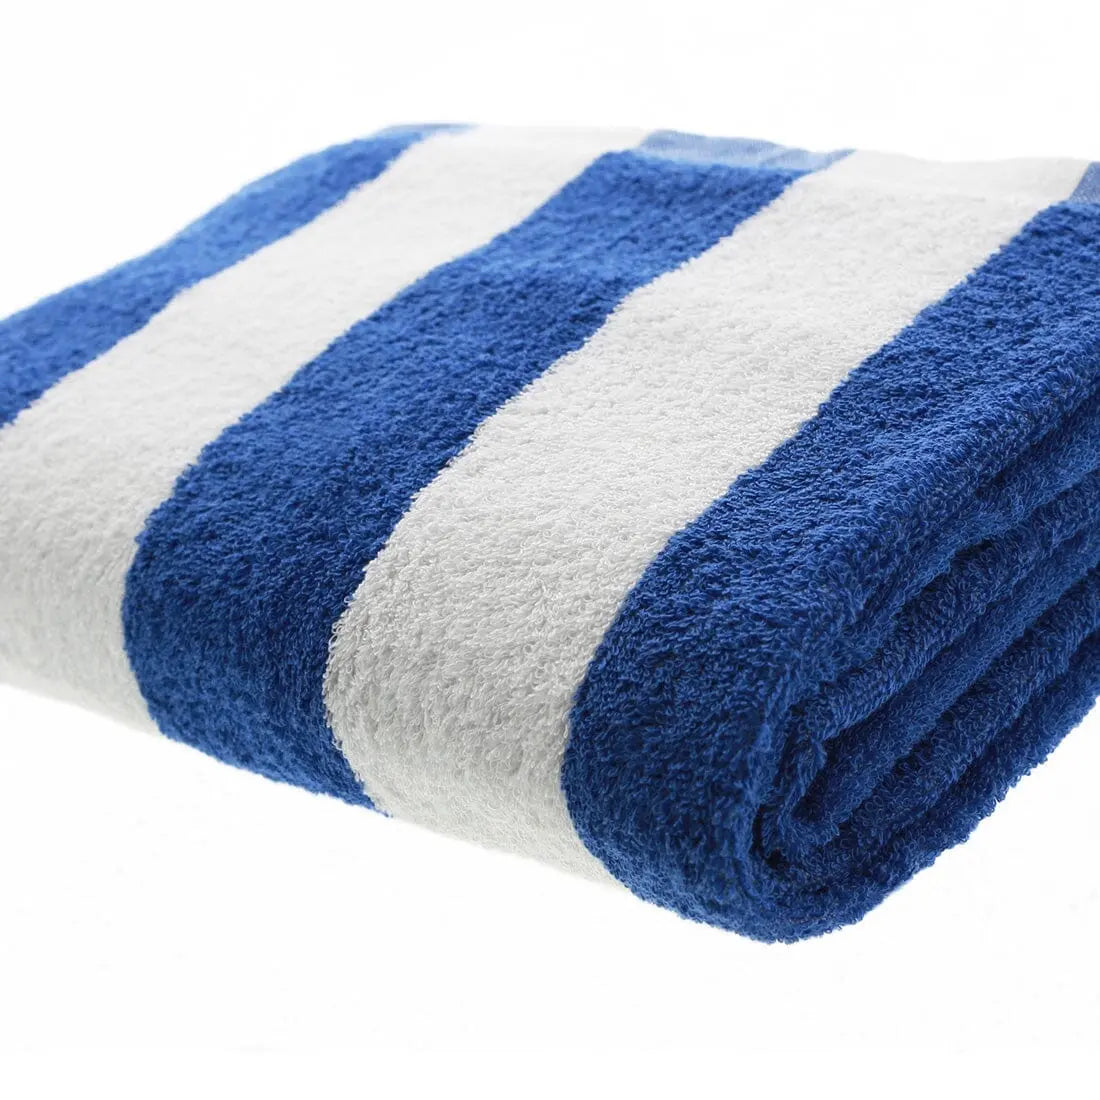 Striped Pool Towels - Duncan Stewart 1978 Beach-Towels-Blue Duncan Stewart 1978